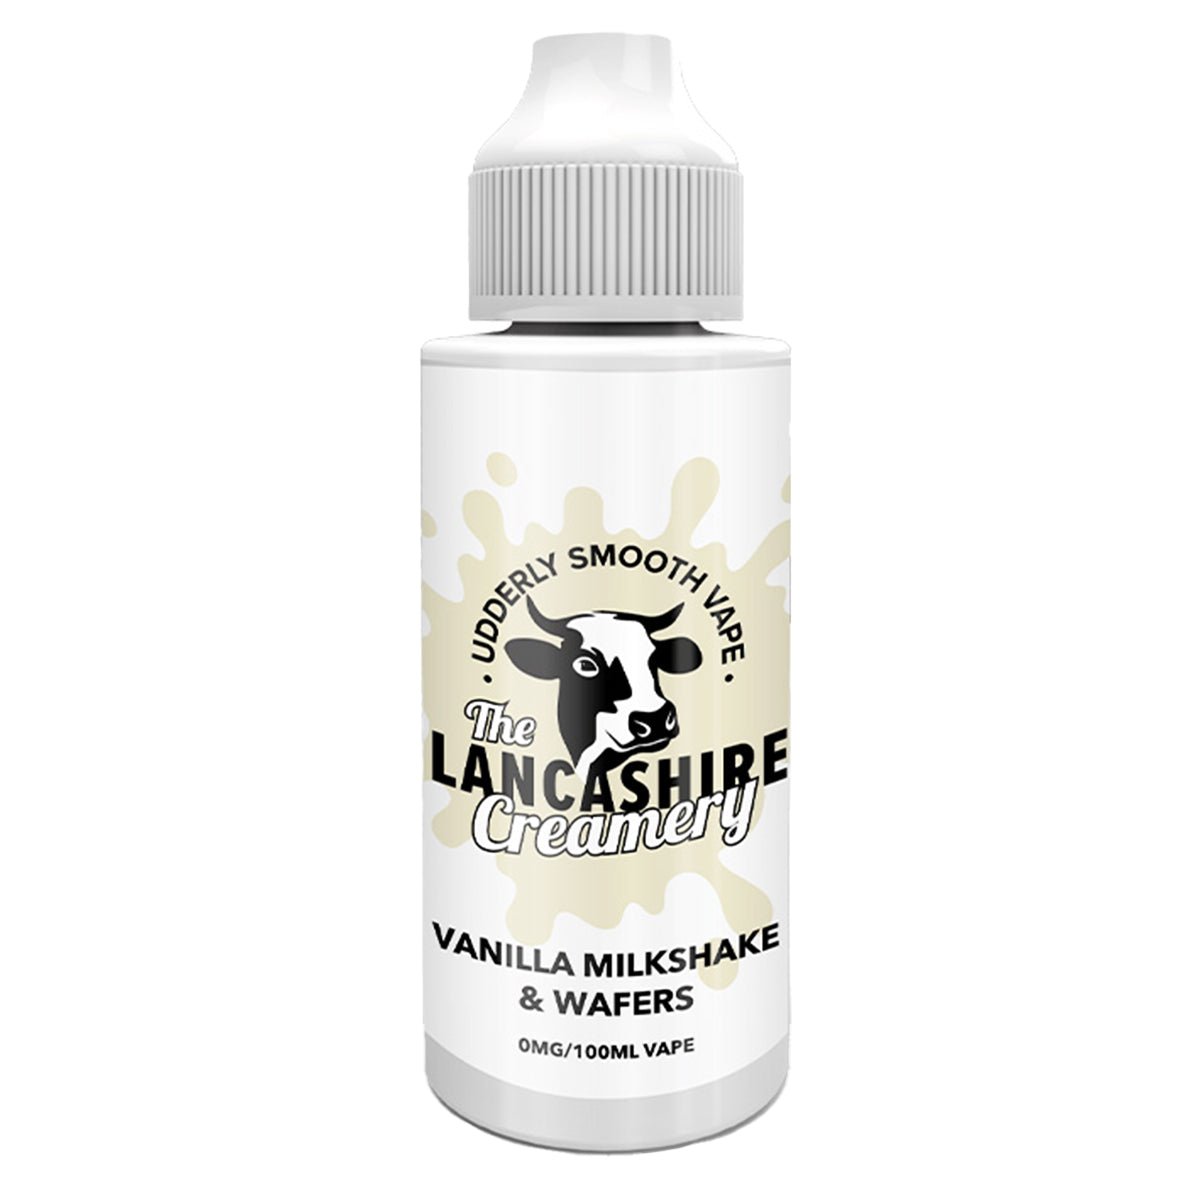 Vanilla Milkshake & Wafers 100ml Shortfill By The Lancashire Creamery - Prime Vapes UK